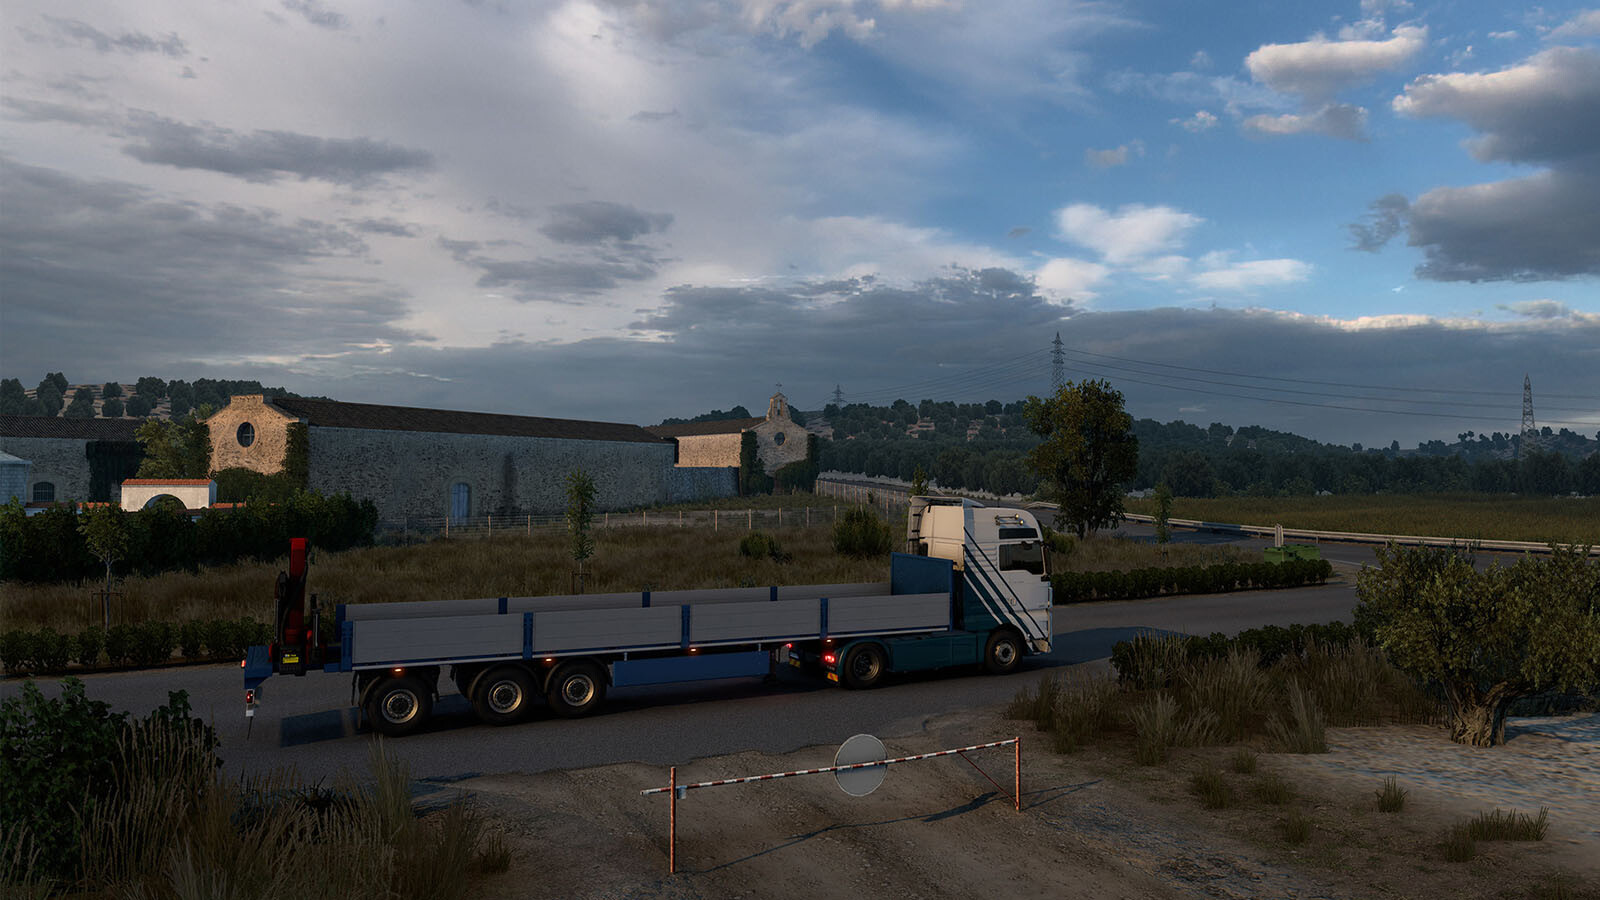 Euro Truck Simulator 2 - Iberia, PC Mac Linux Steam Downloadable Content